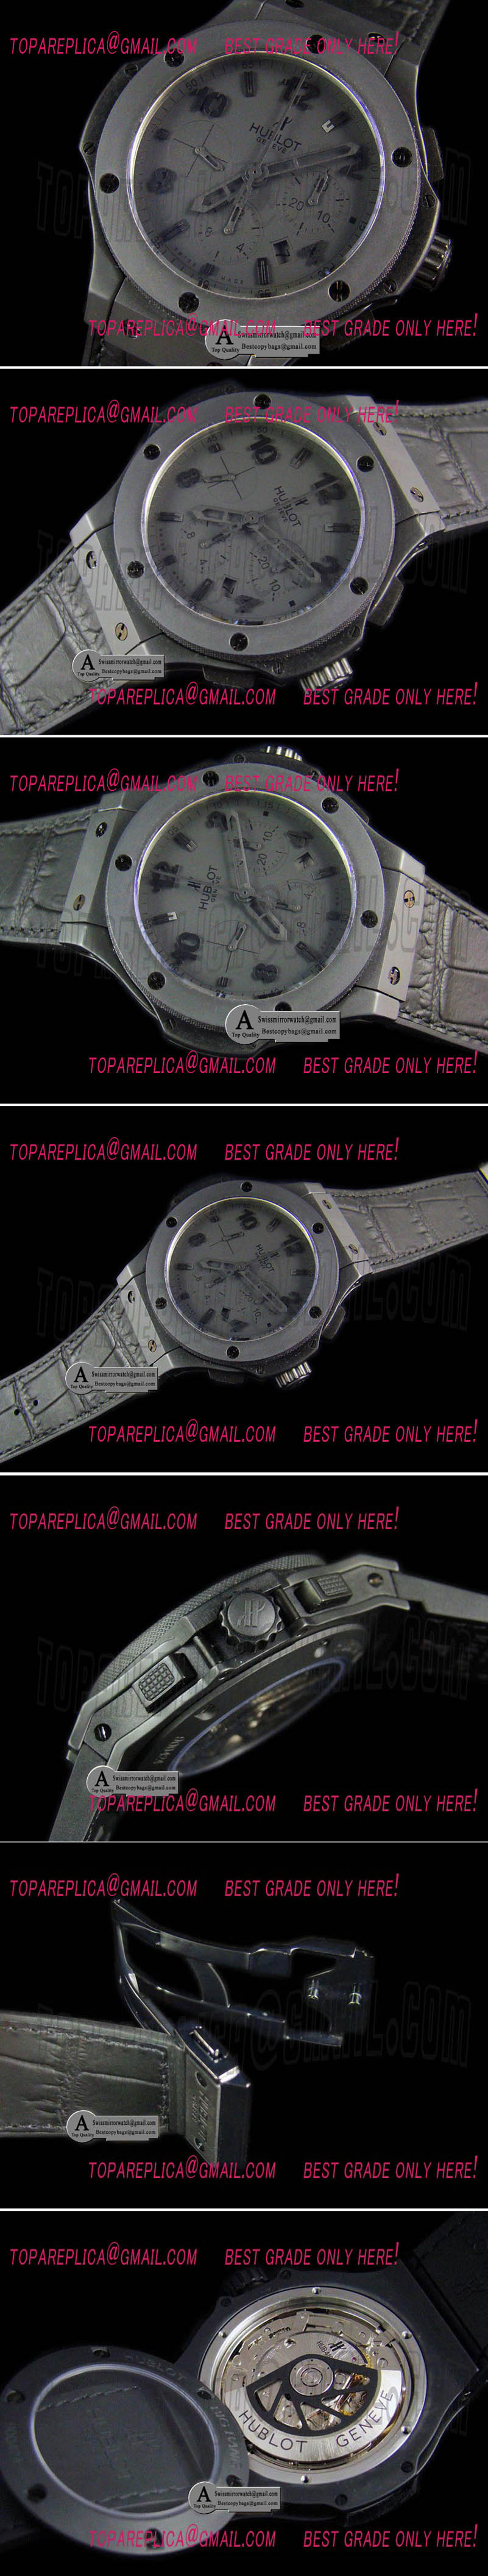 Hublot 301.CI.1110.CI Big Bang All Black II Ceramic/Leather Black A-7750 Replica Watches